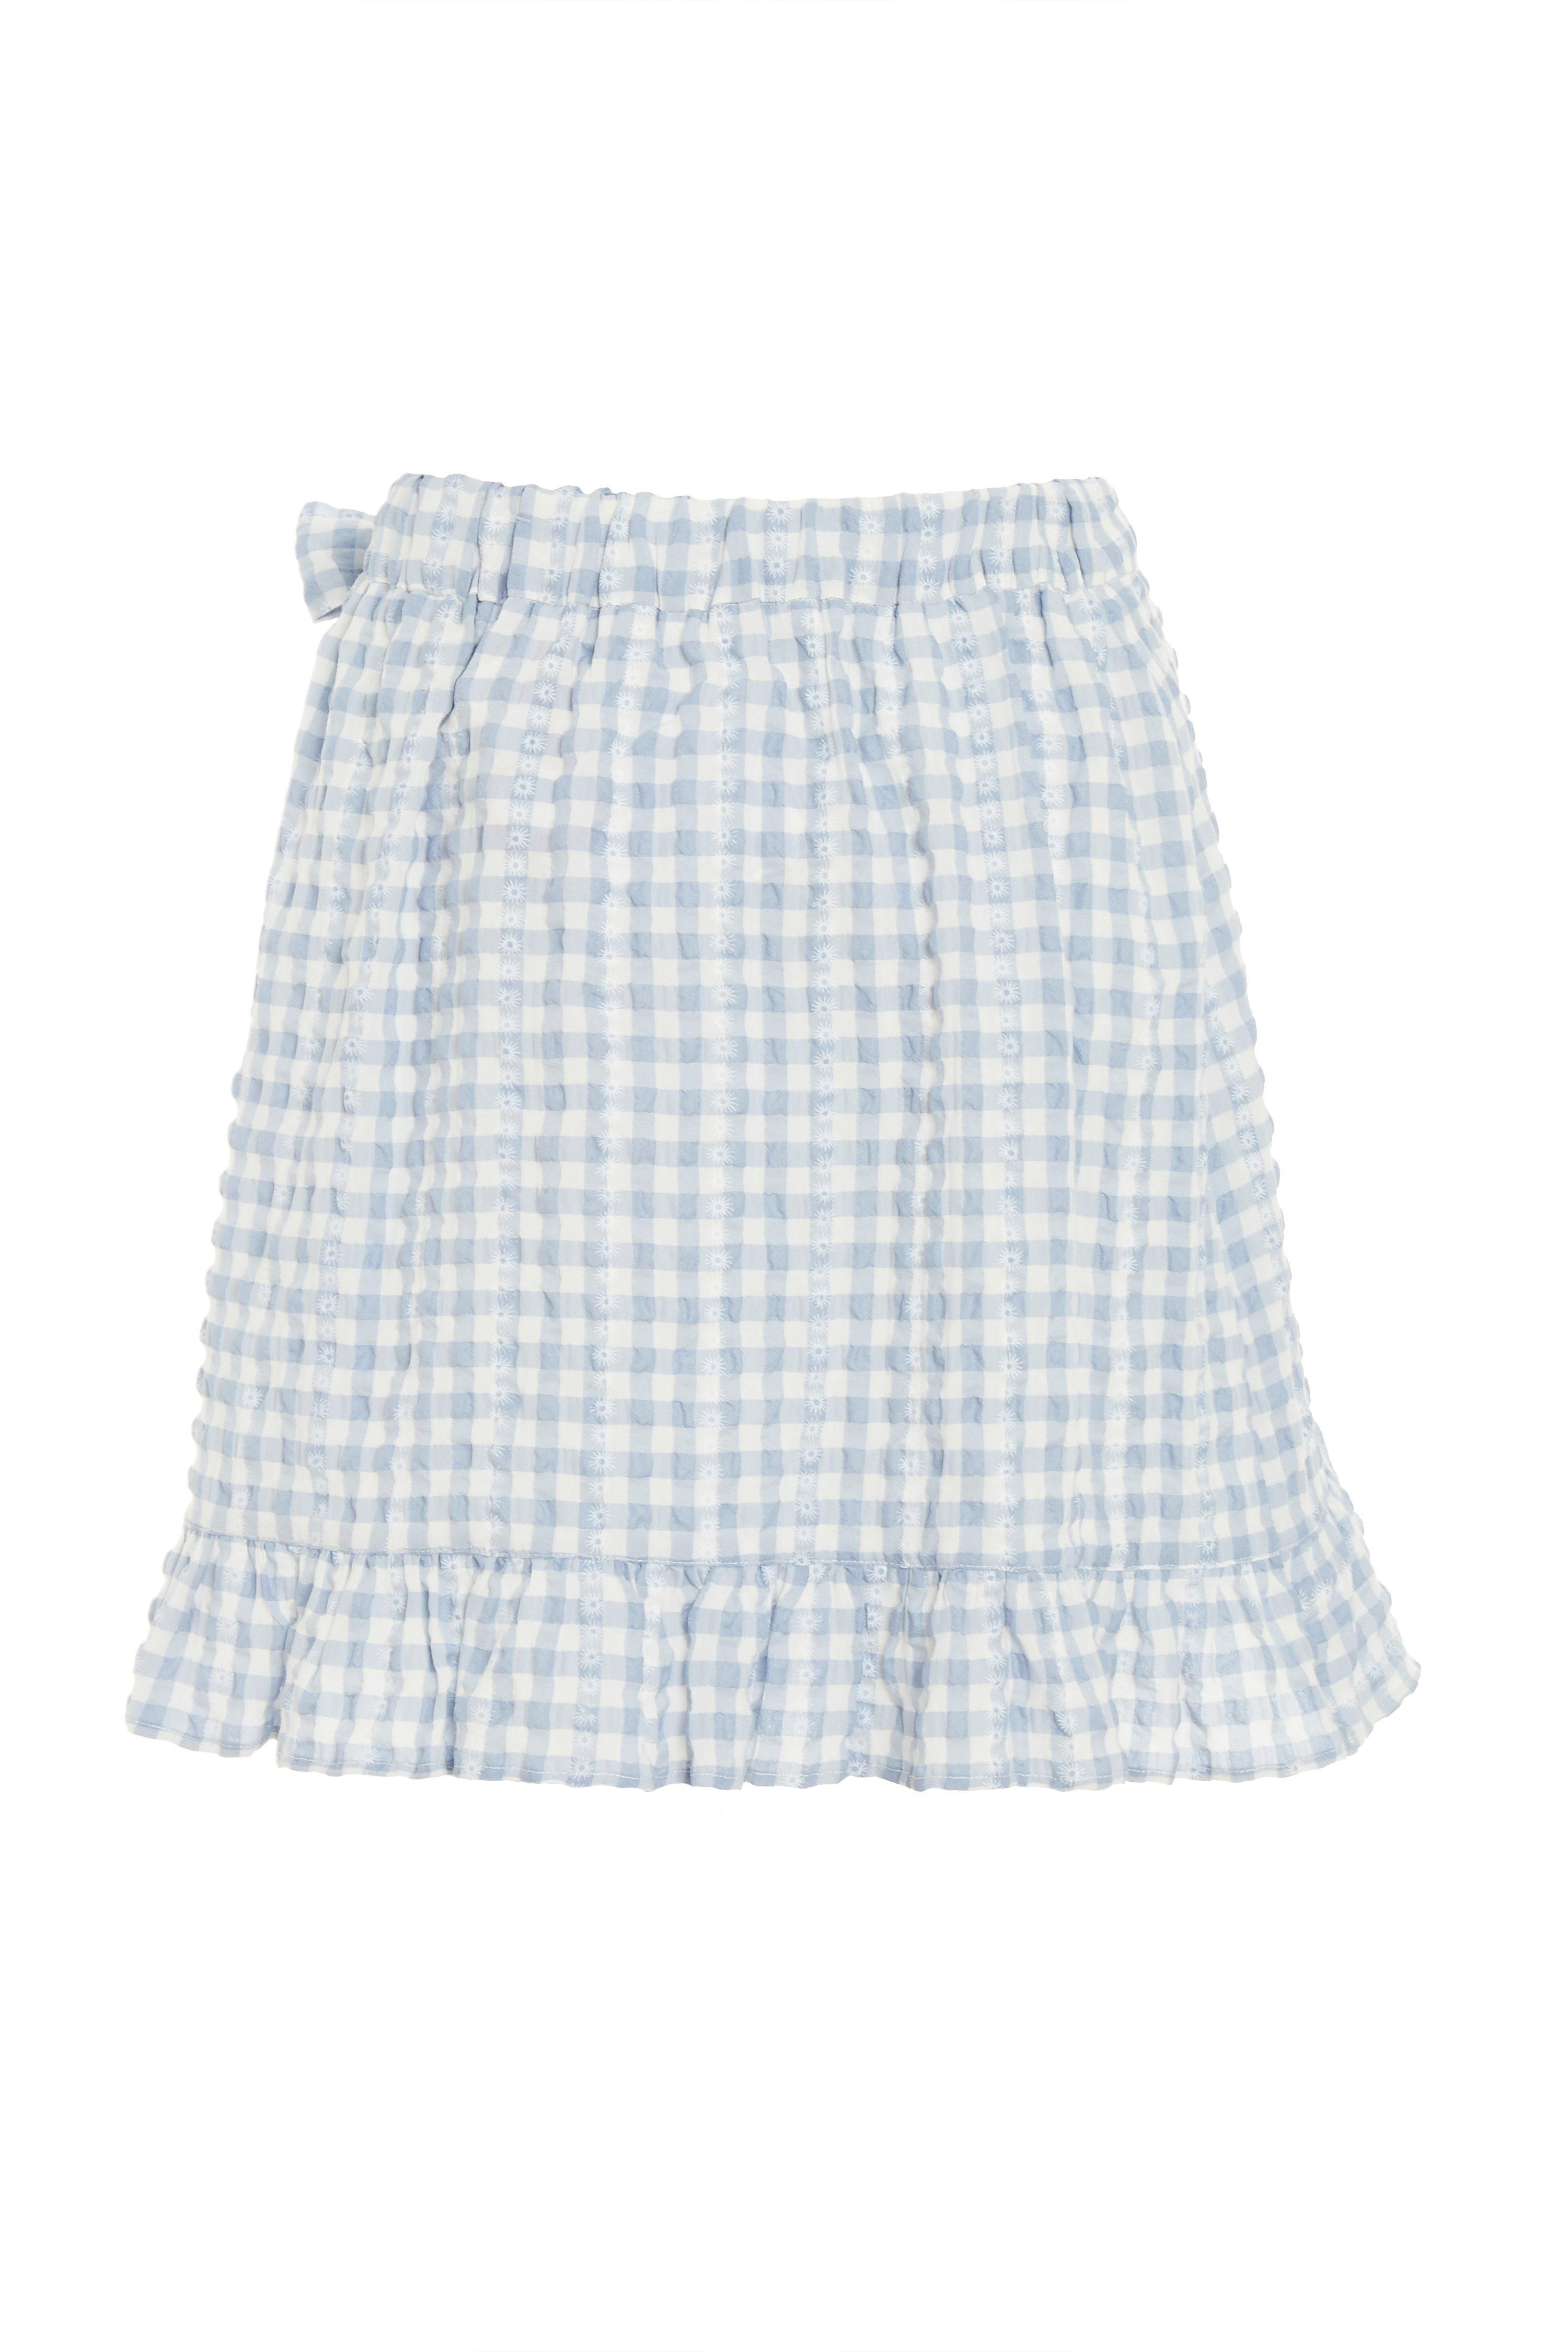 - Gingham print  - Mini skirt  - Wrap style  - High waist  - Length: 56cm approx  - Model Height: 5' 7